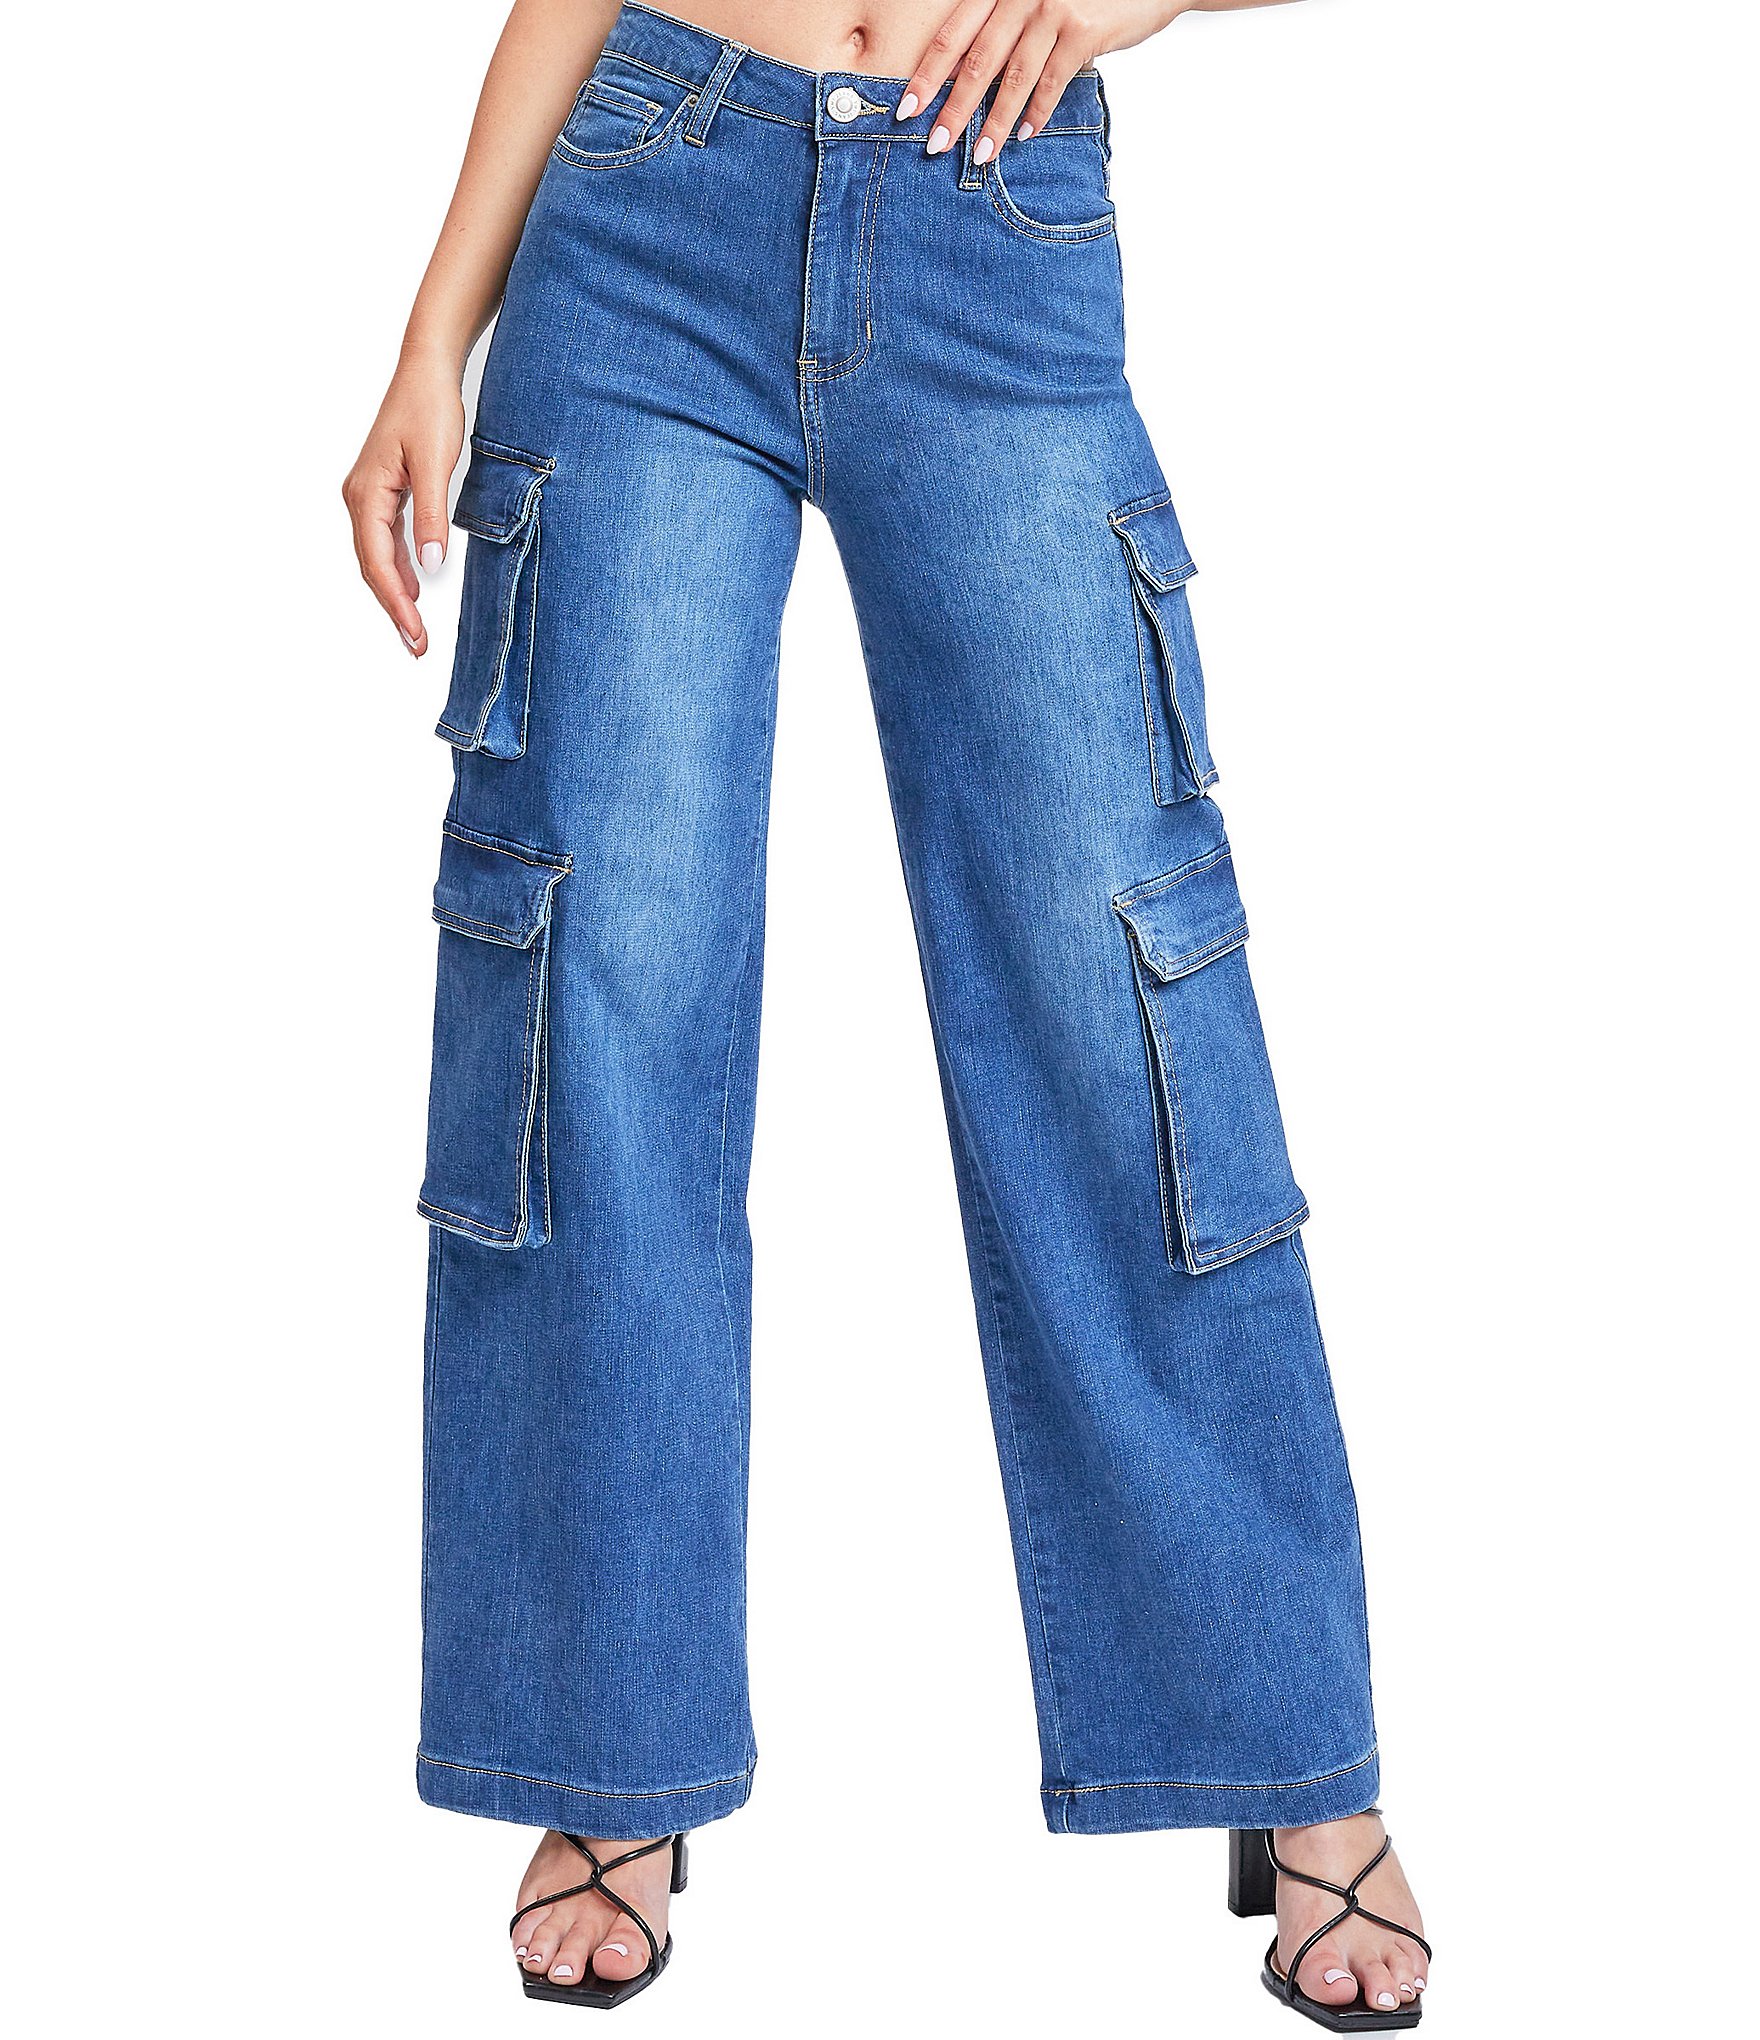 Buy SENDIPO Women High-Rise Straight Fit Cargo Jeans, Wide Leg